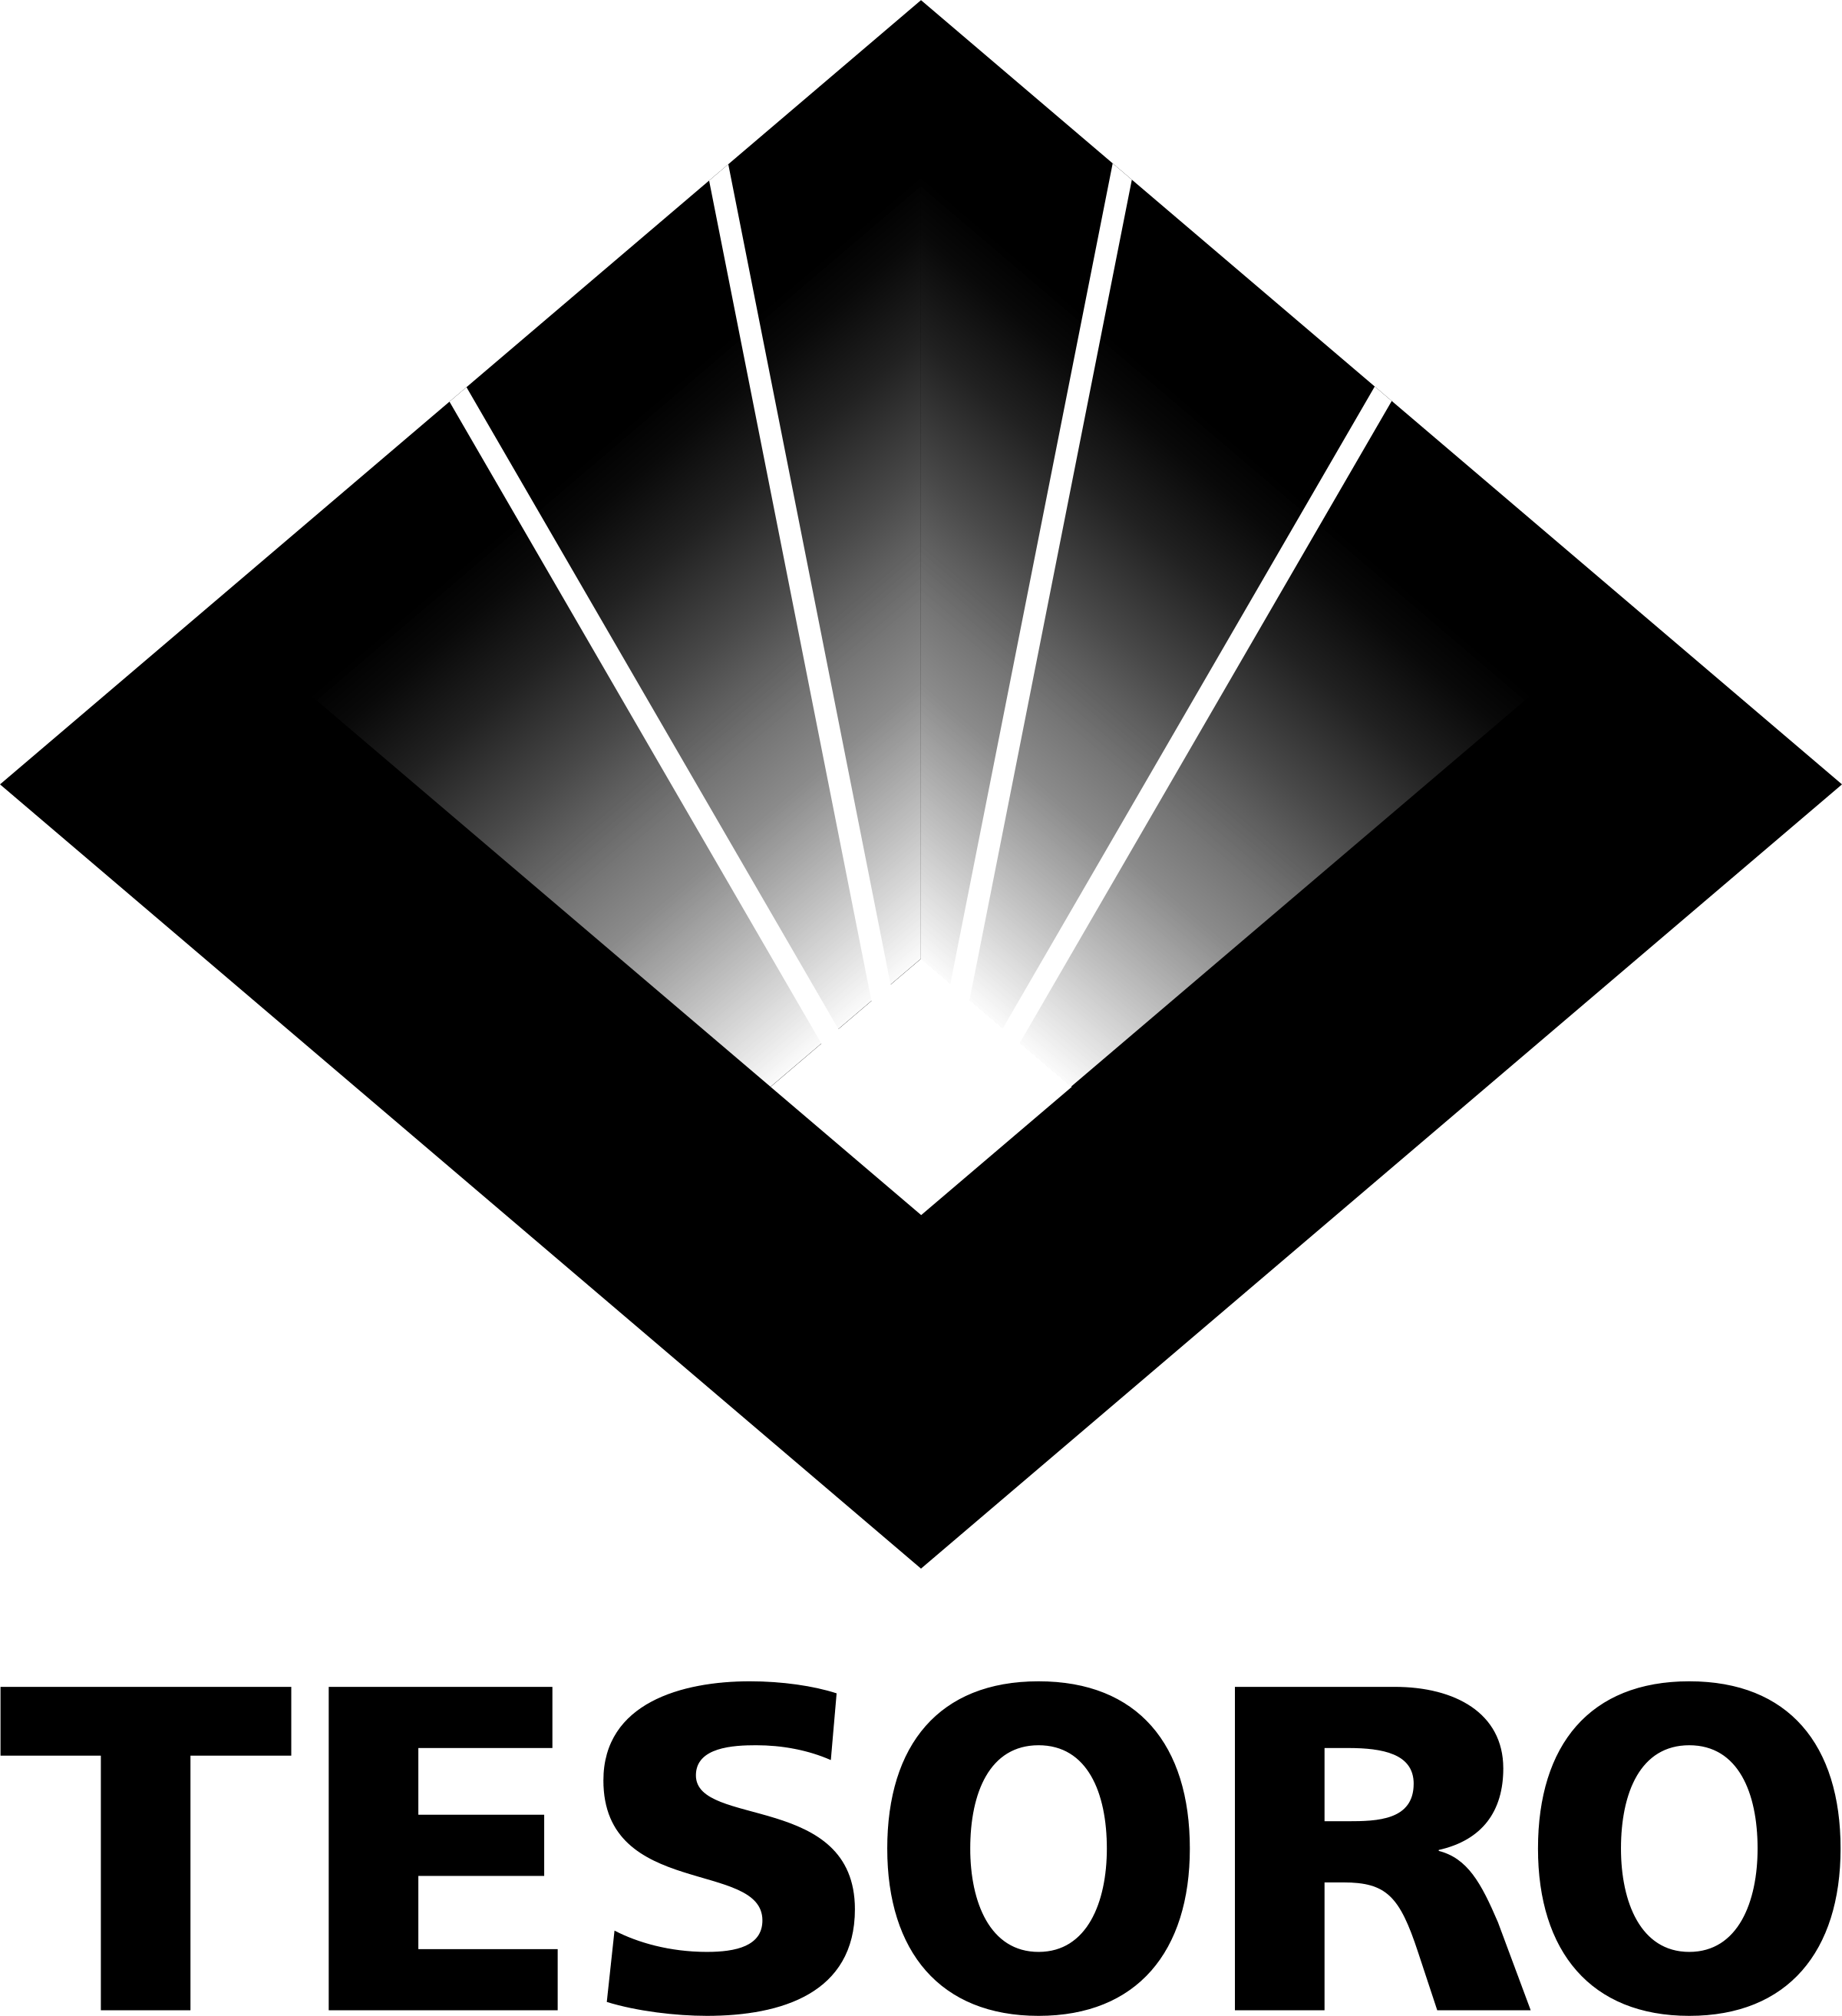 Tesoro Logo - Tesoro Pertoleum Logo PNG Transparent & SVG Vector